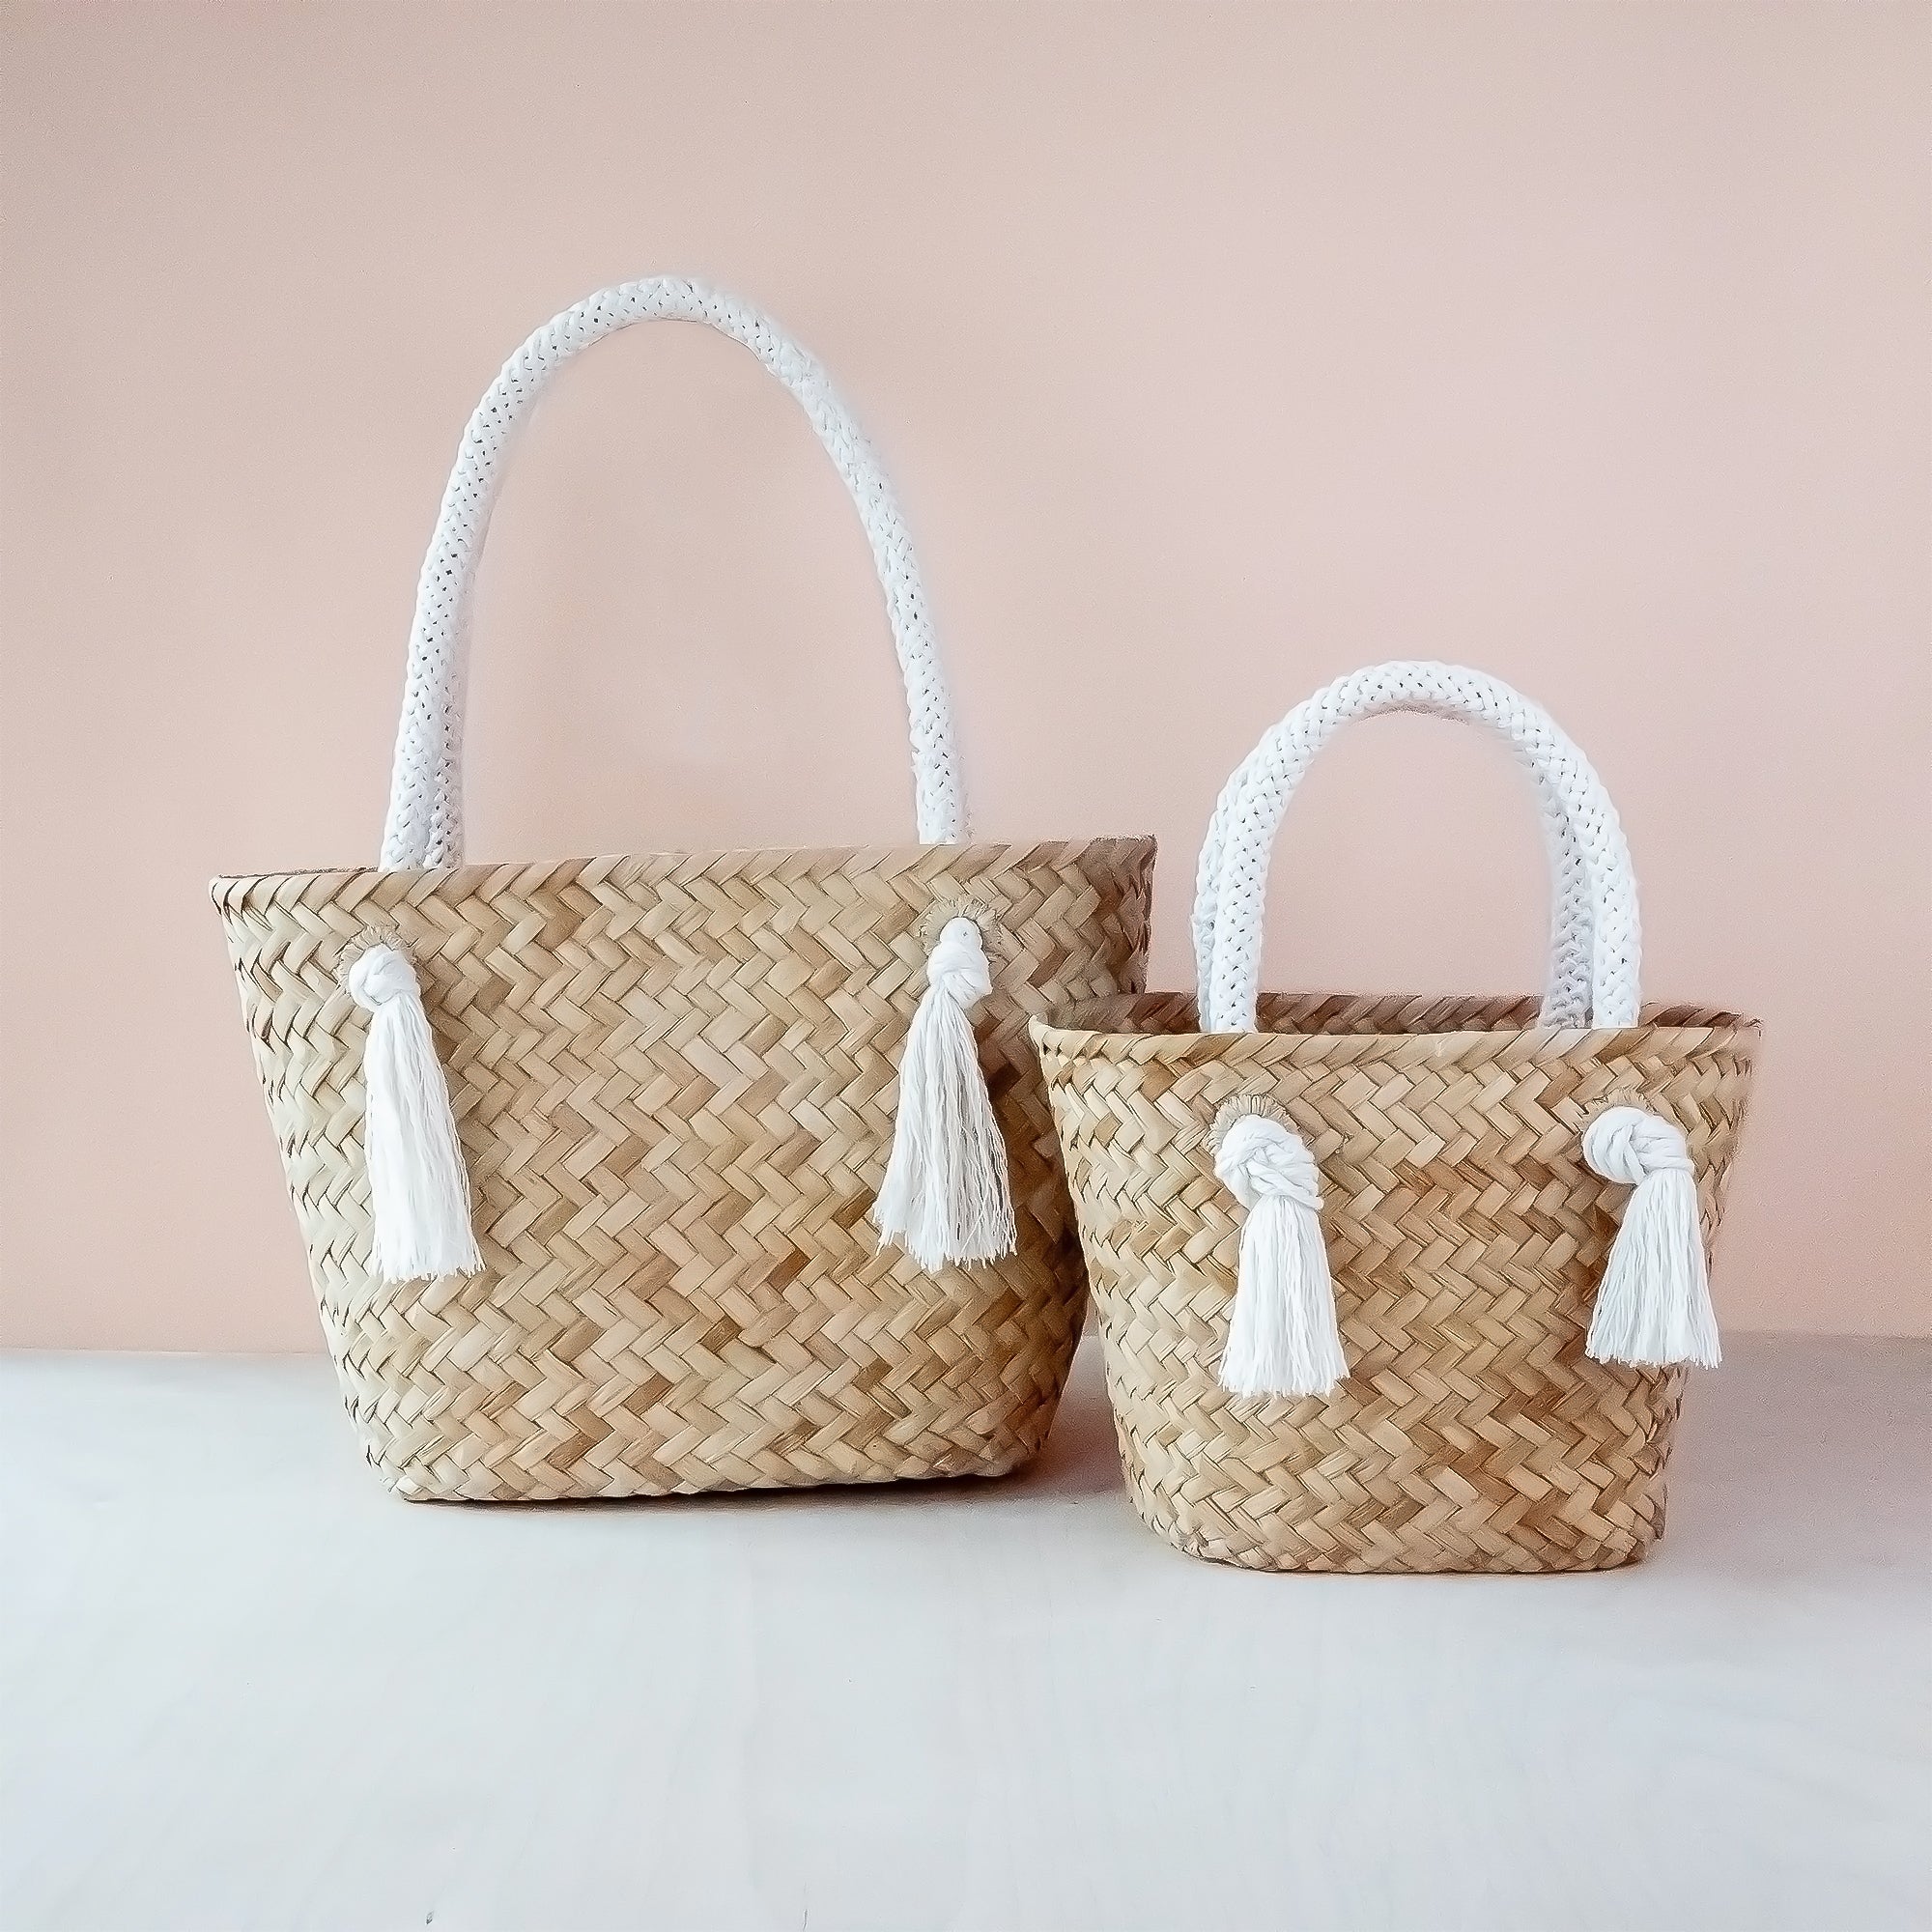 Handbags - Oat Classic Market Tote with Braided Handles - Modern Woven Totes | LIKHA - LIKHÂ